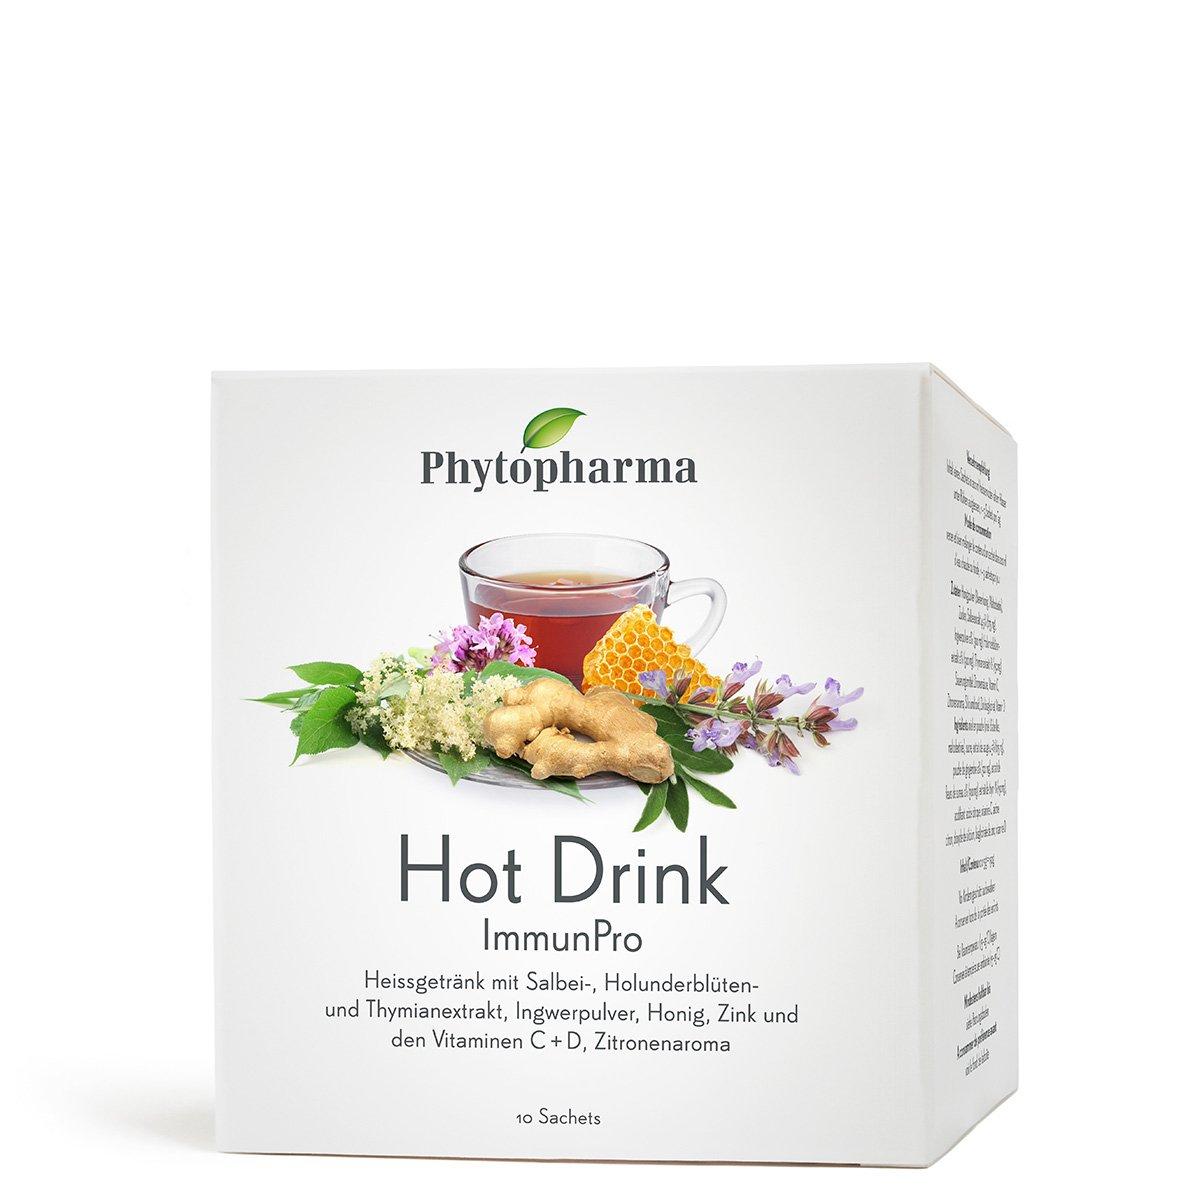 Image of Phytopharma Hot Drink ImmunPro - 10 pieces